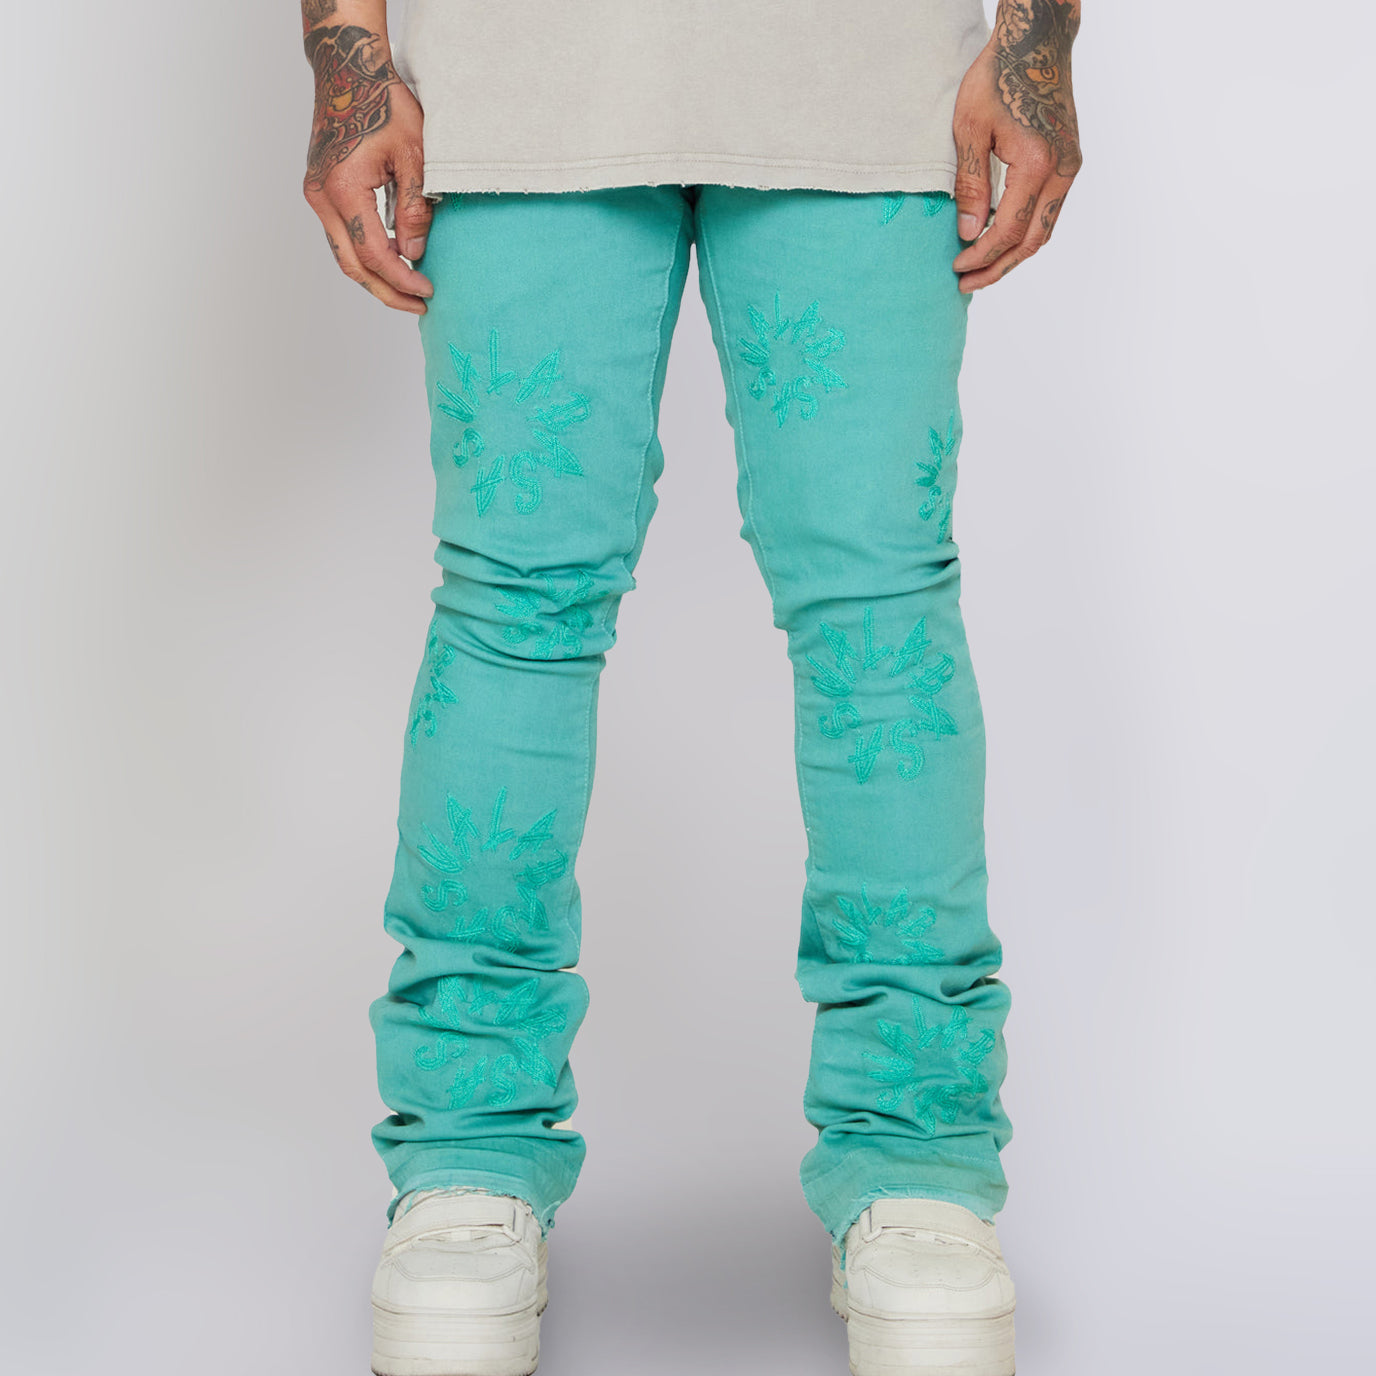 Vintage Print Fashion Pile Pants Jeans